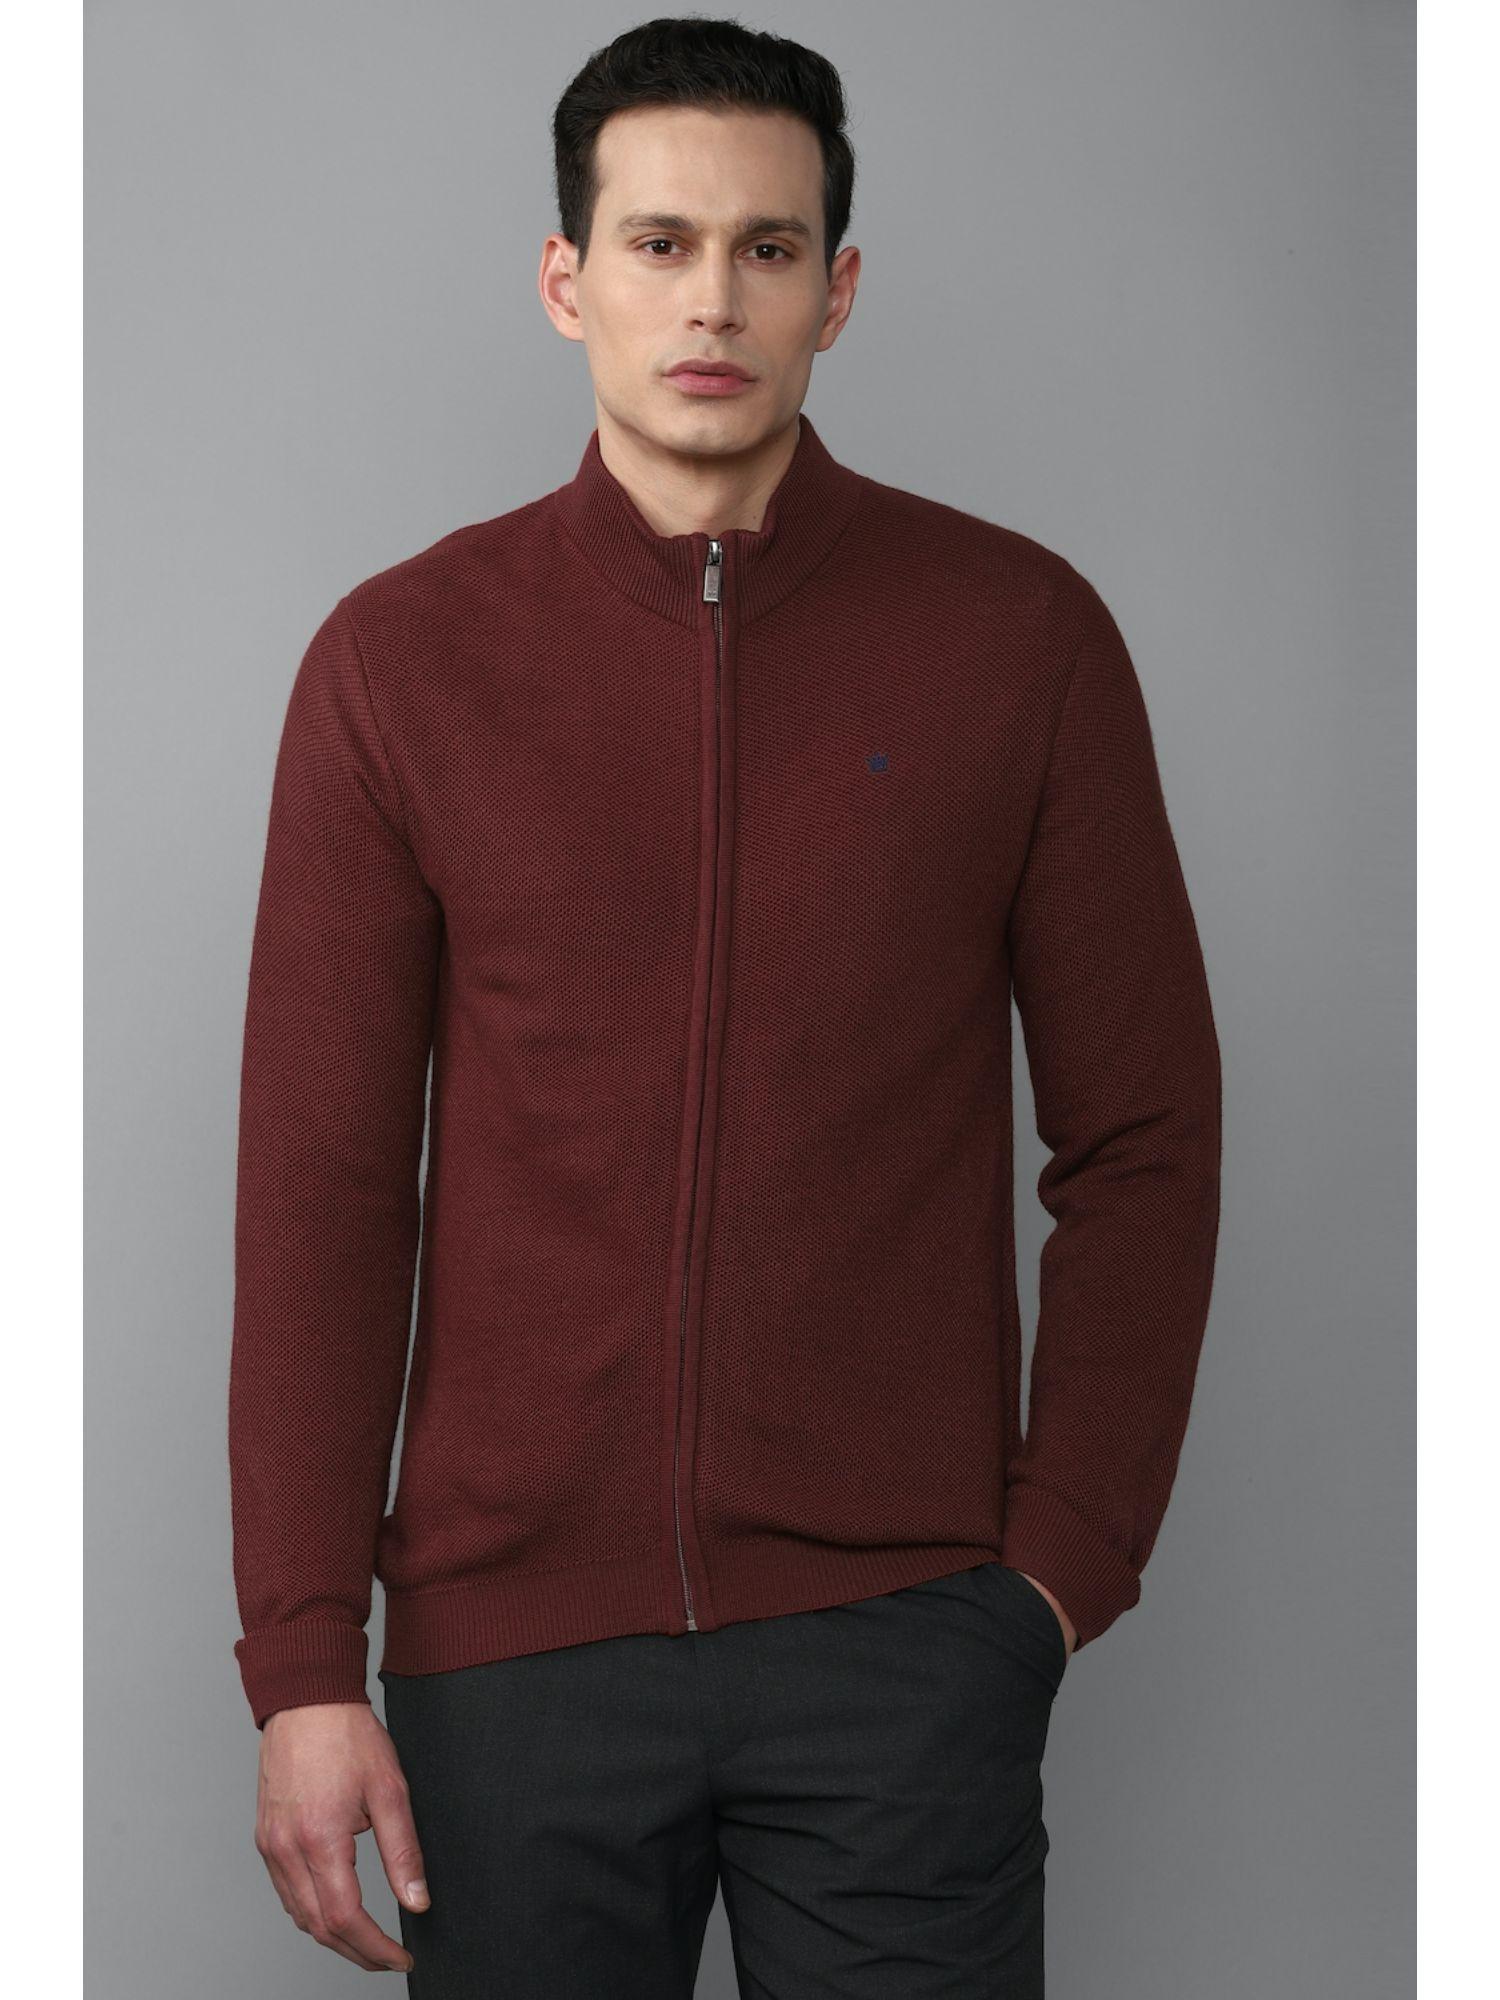 maroon-jacket